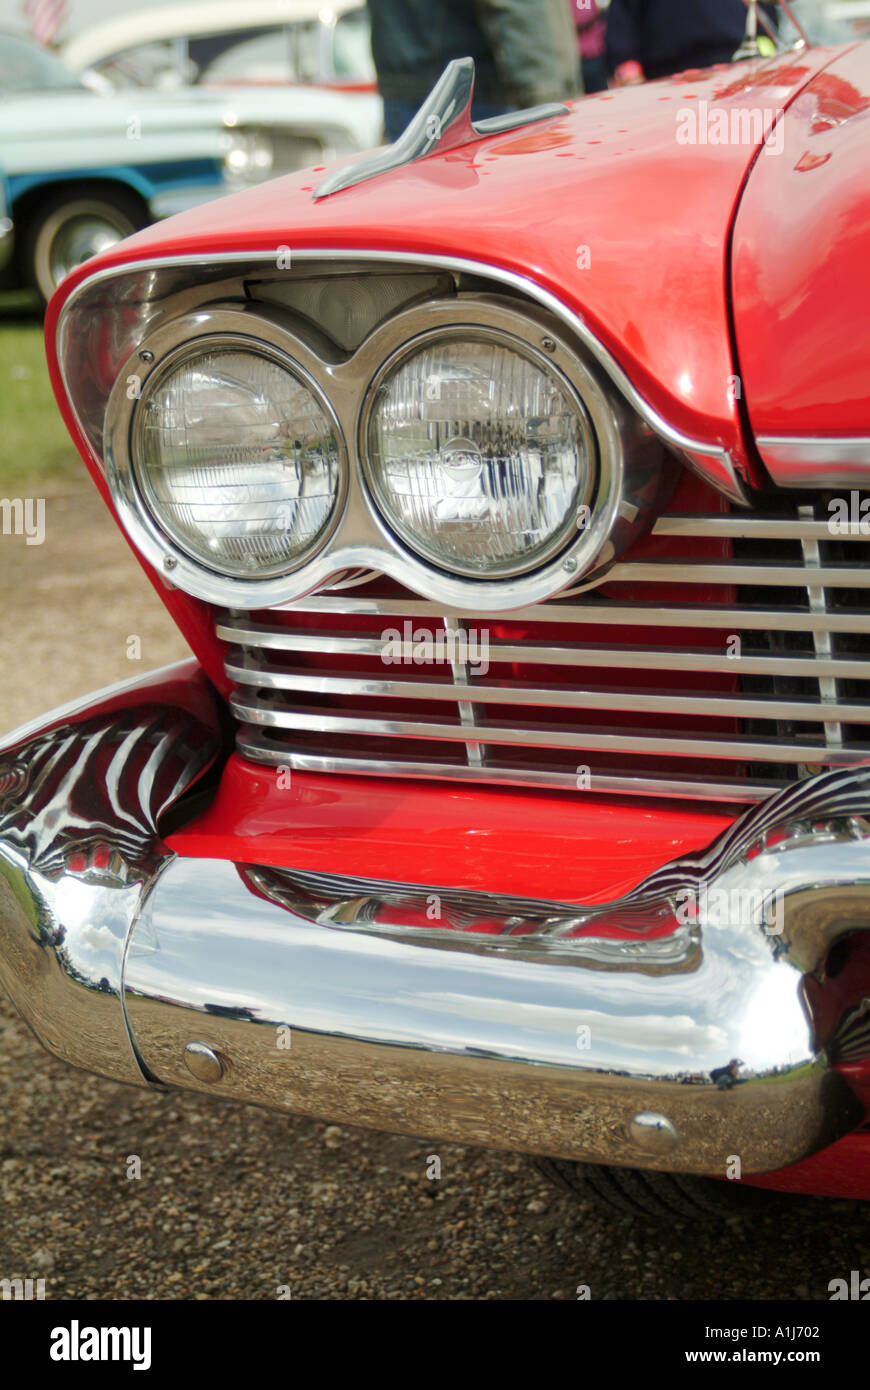 1958 plymouth fury classic car american us usa v8 engine gas guzzler chrome fins stephen king christine Stock Photo